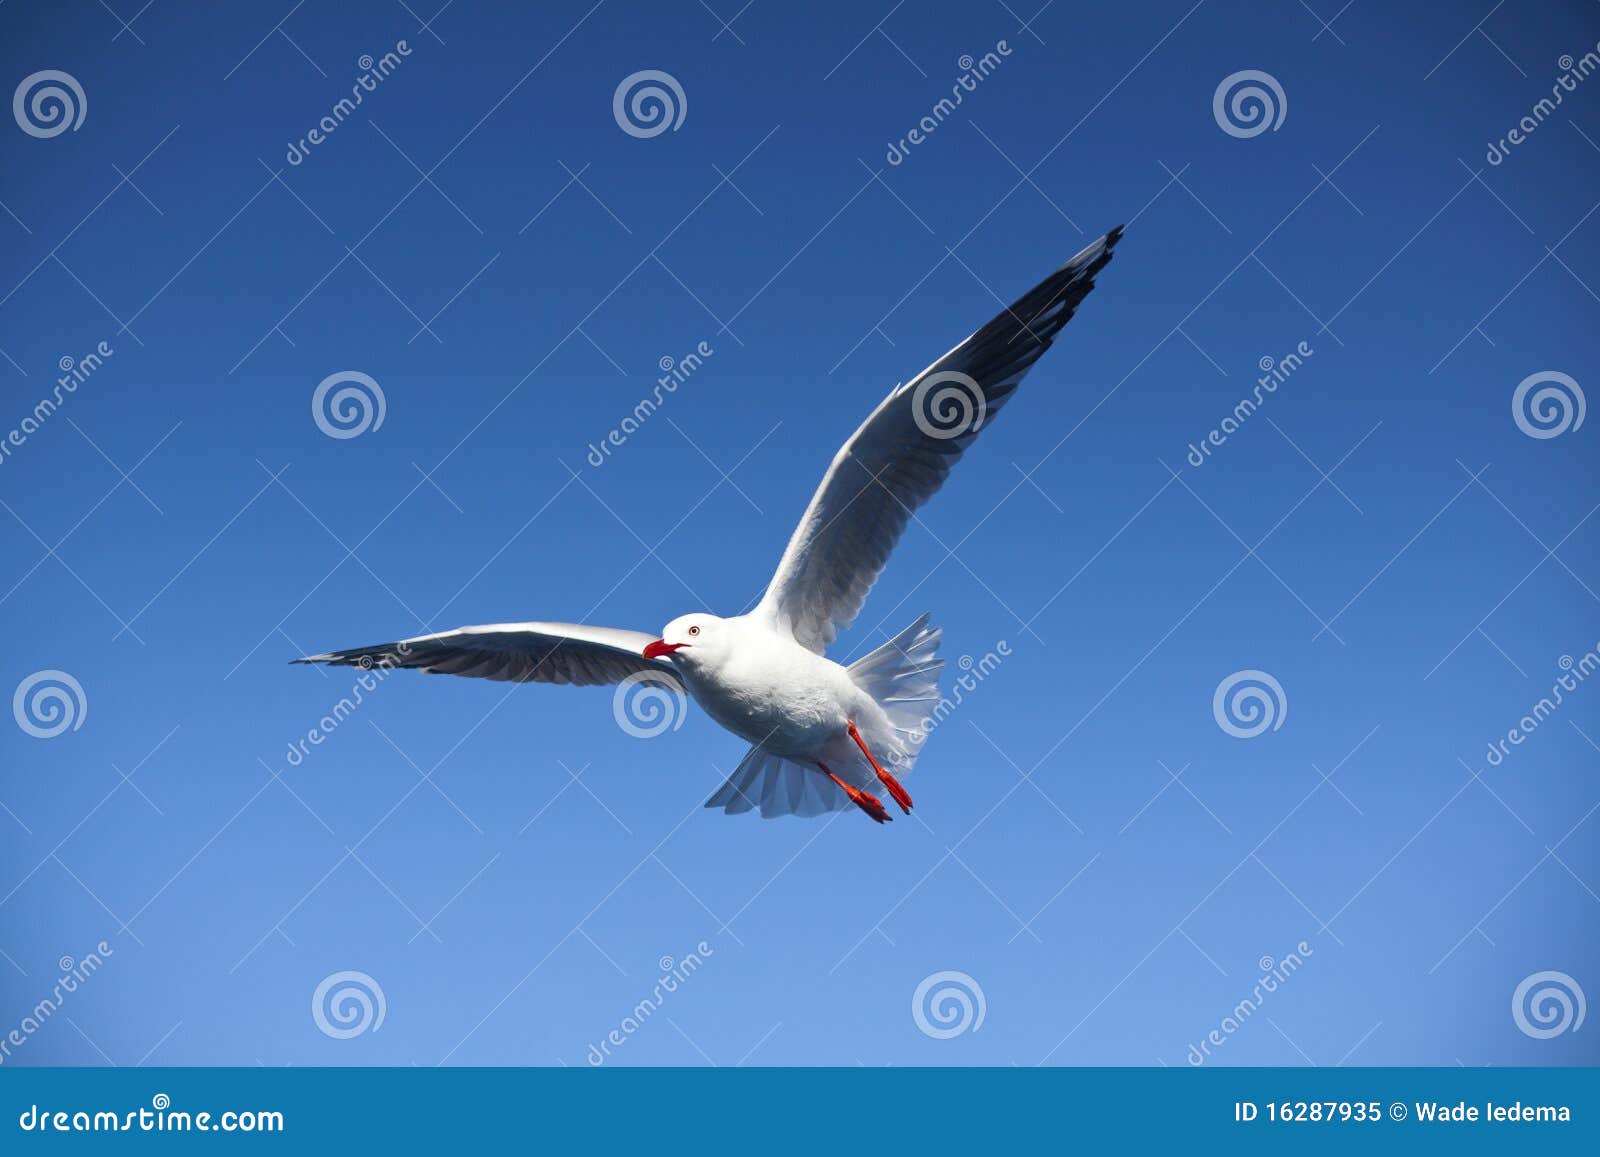 seagull flight, sea bird flying through blue sky